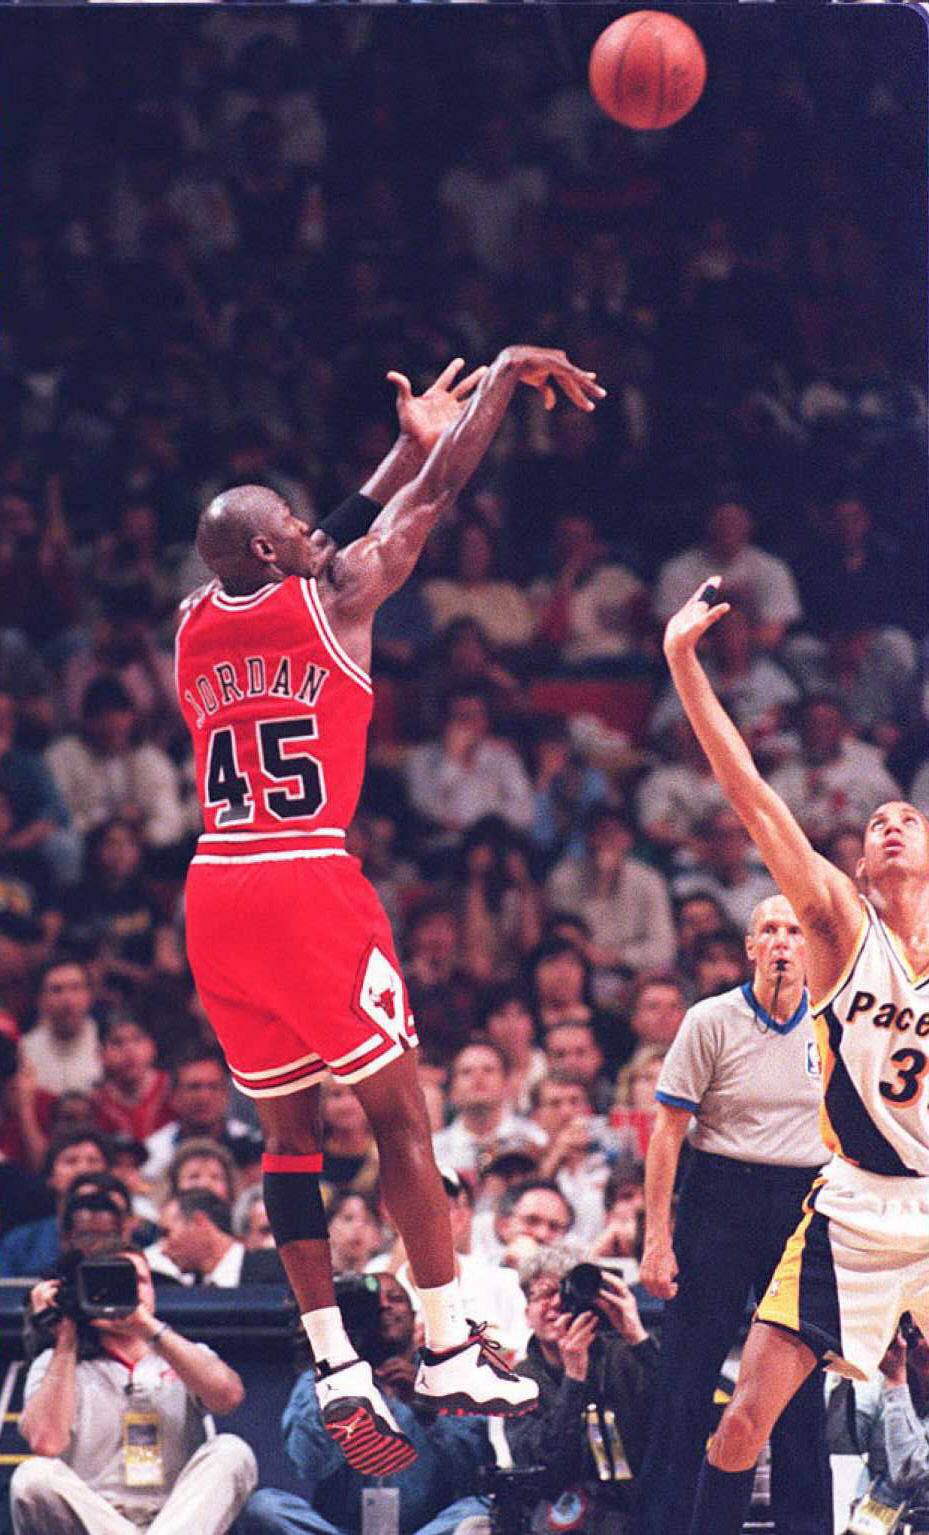 Michael Jordan's First Game Image 2 from Michael Jordan's Most